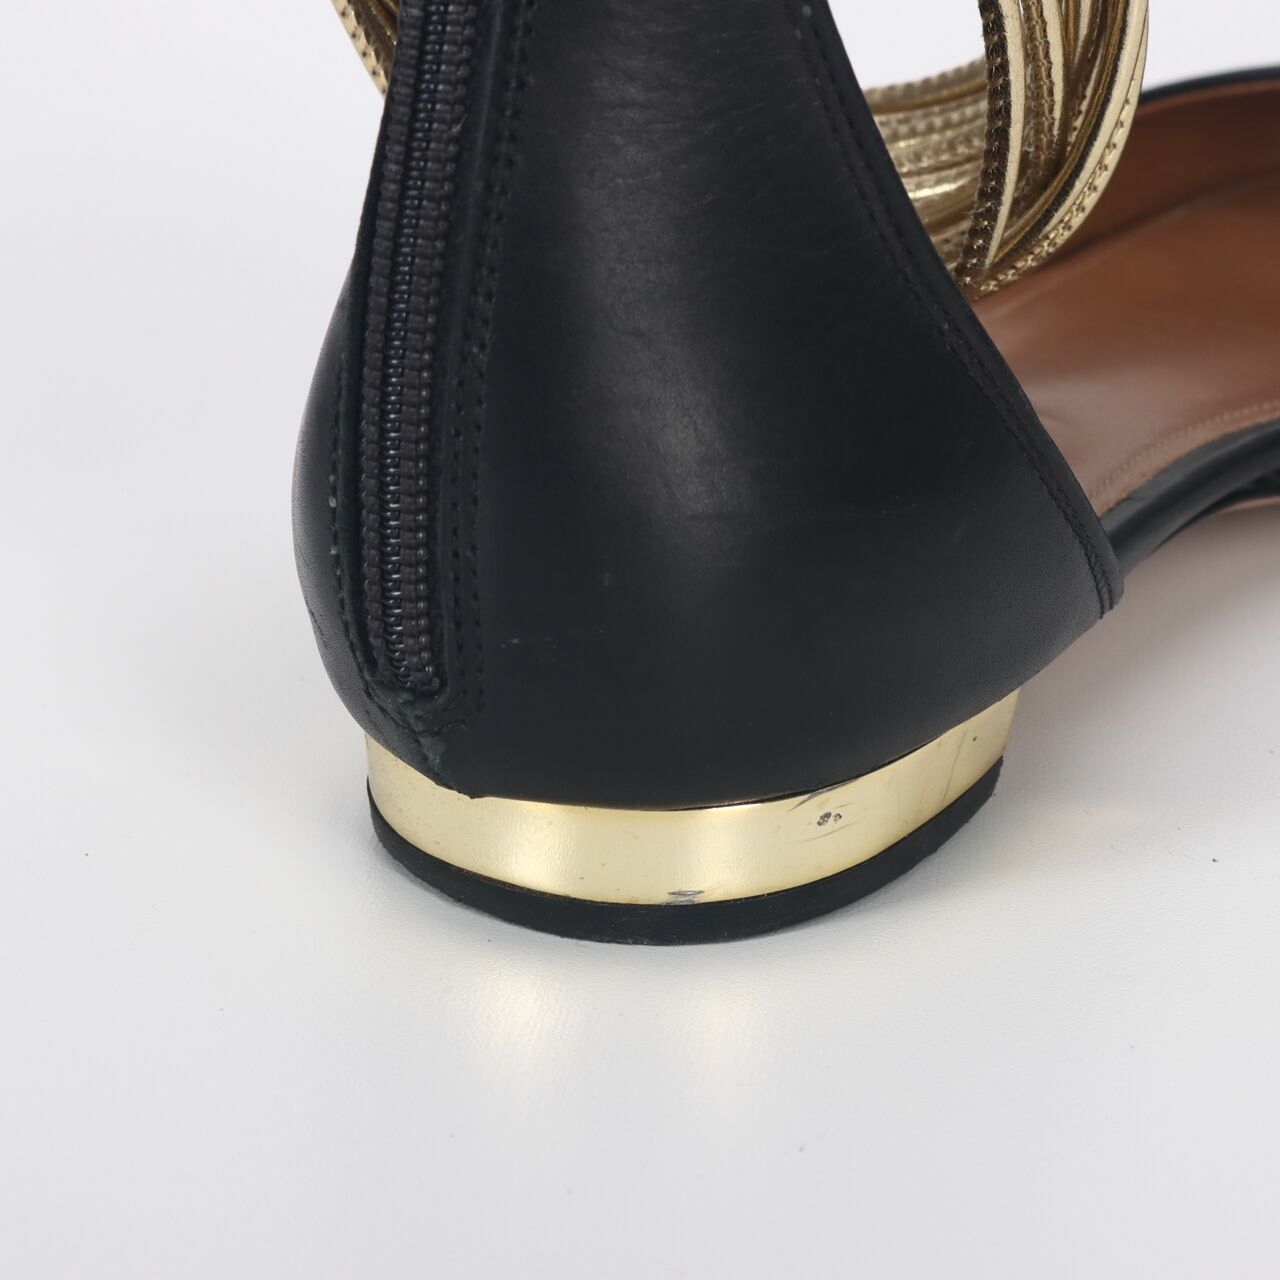 Aquazzura Gold & Black Ankle Strap Flats